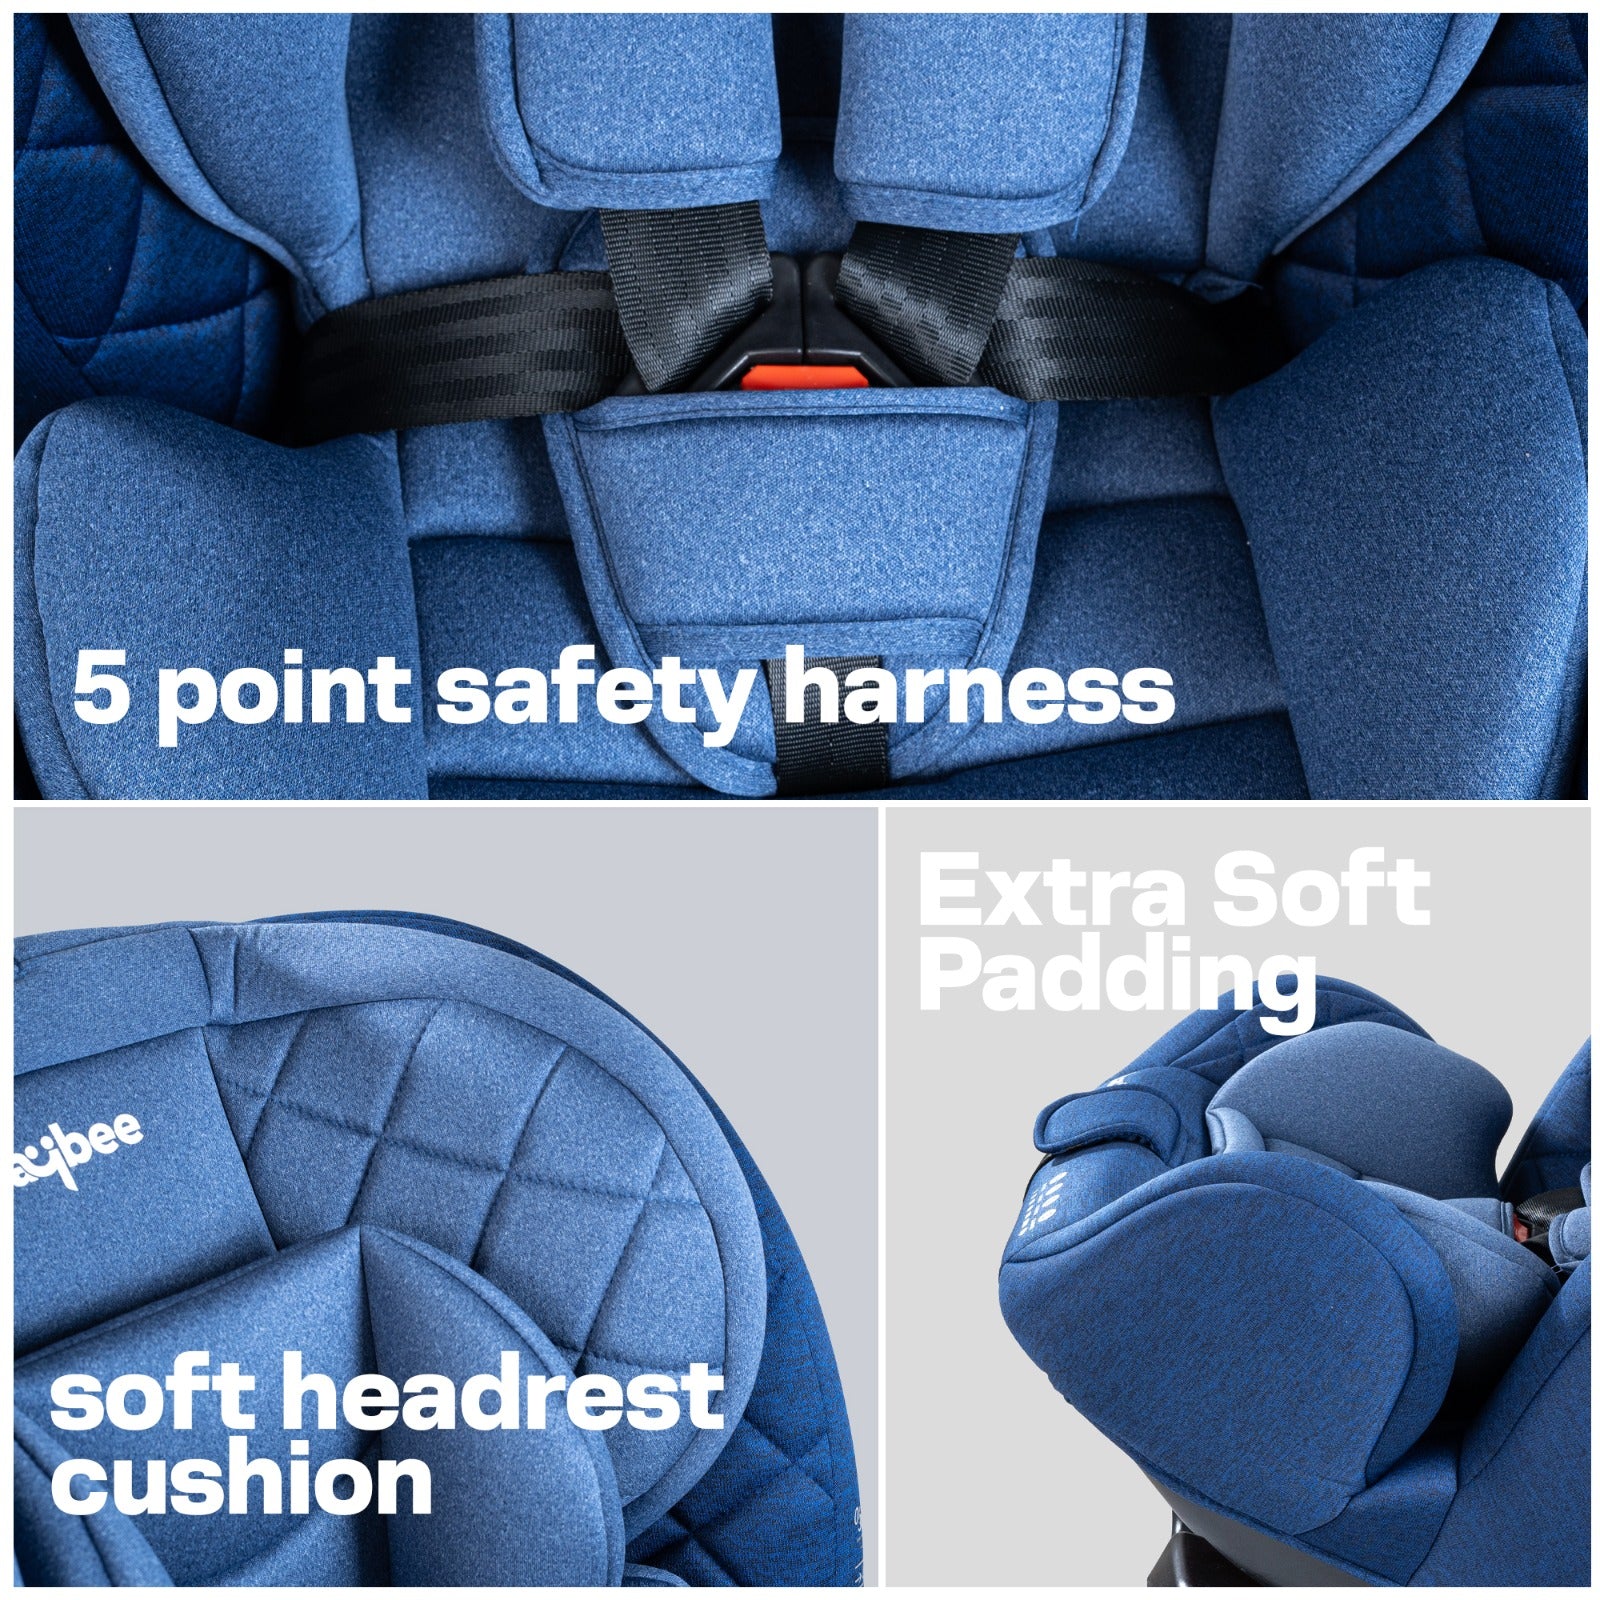 Minikin Defender Isofix Car Seat I 5 Point Safety Harness I NB - 12 Years I Blue